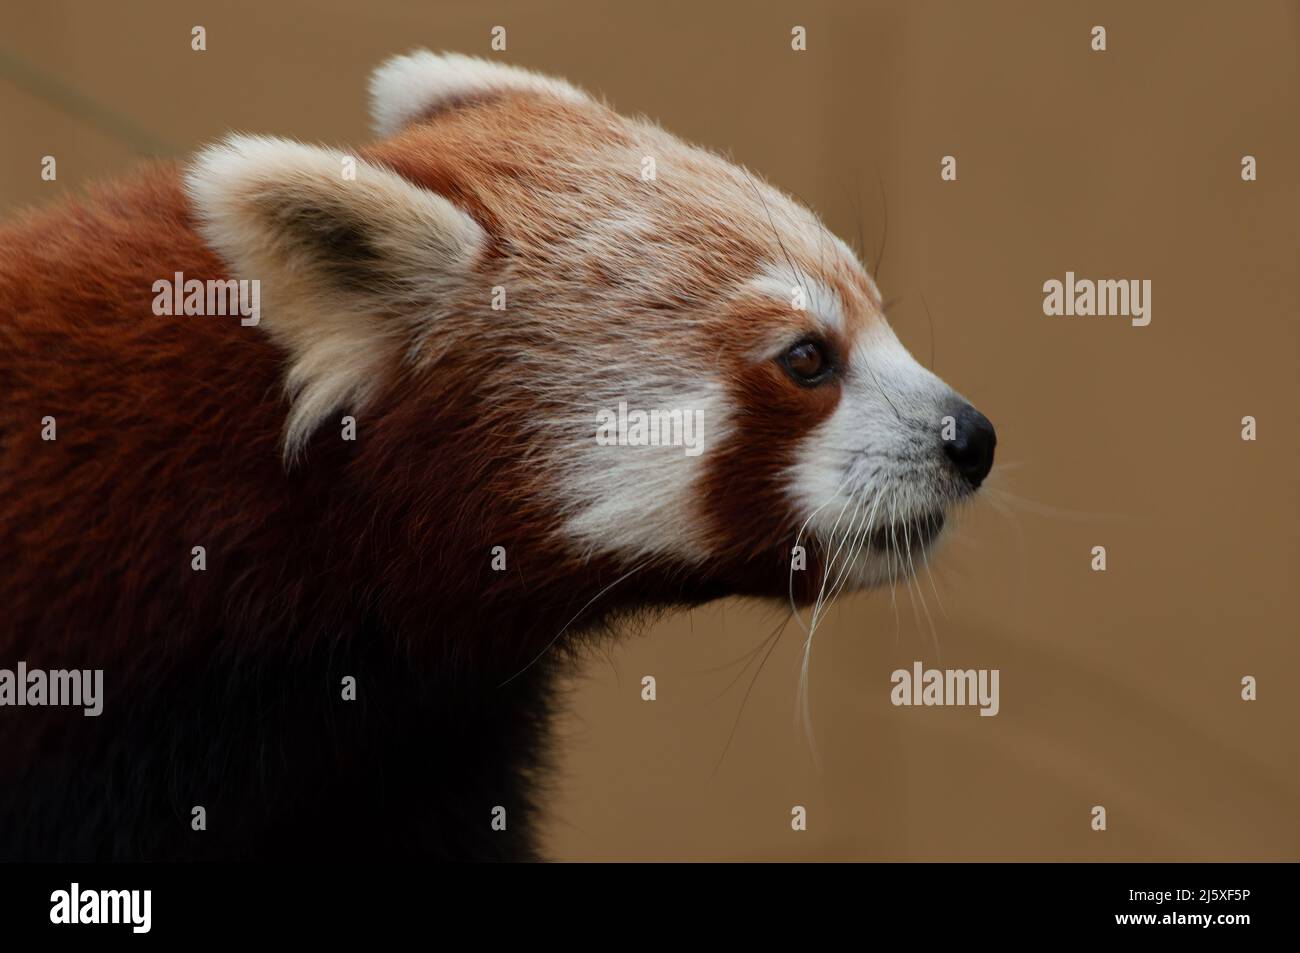 Red Panda, Ailurus fulgens, head shot looking towards right with plain background Stock Photo